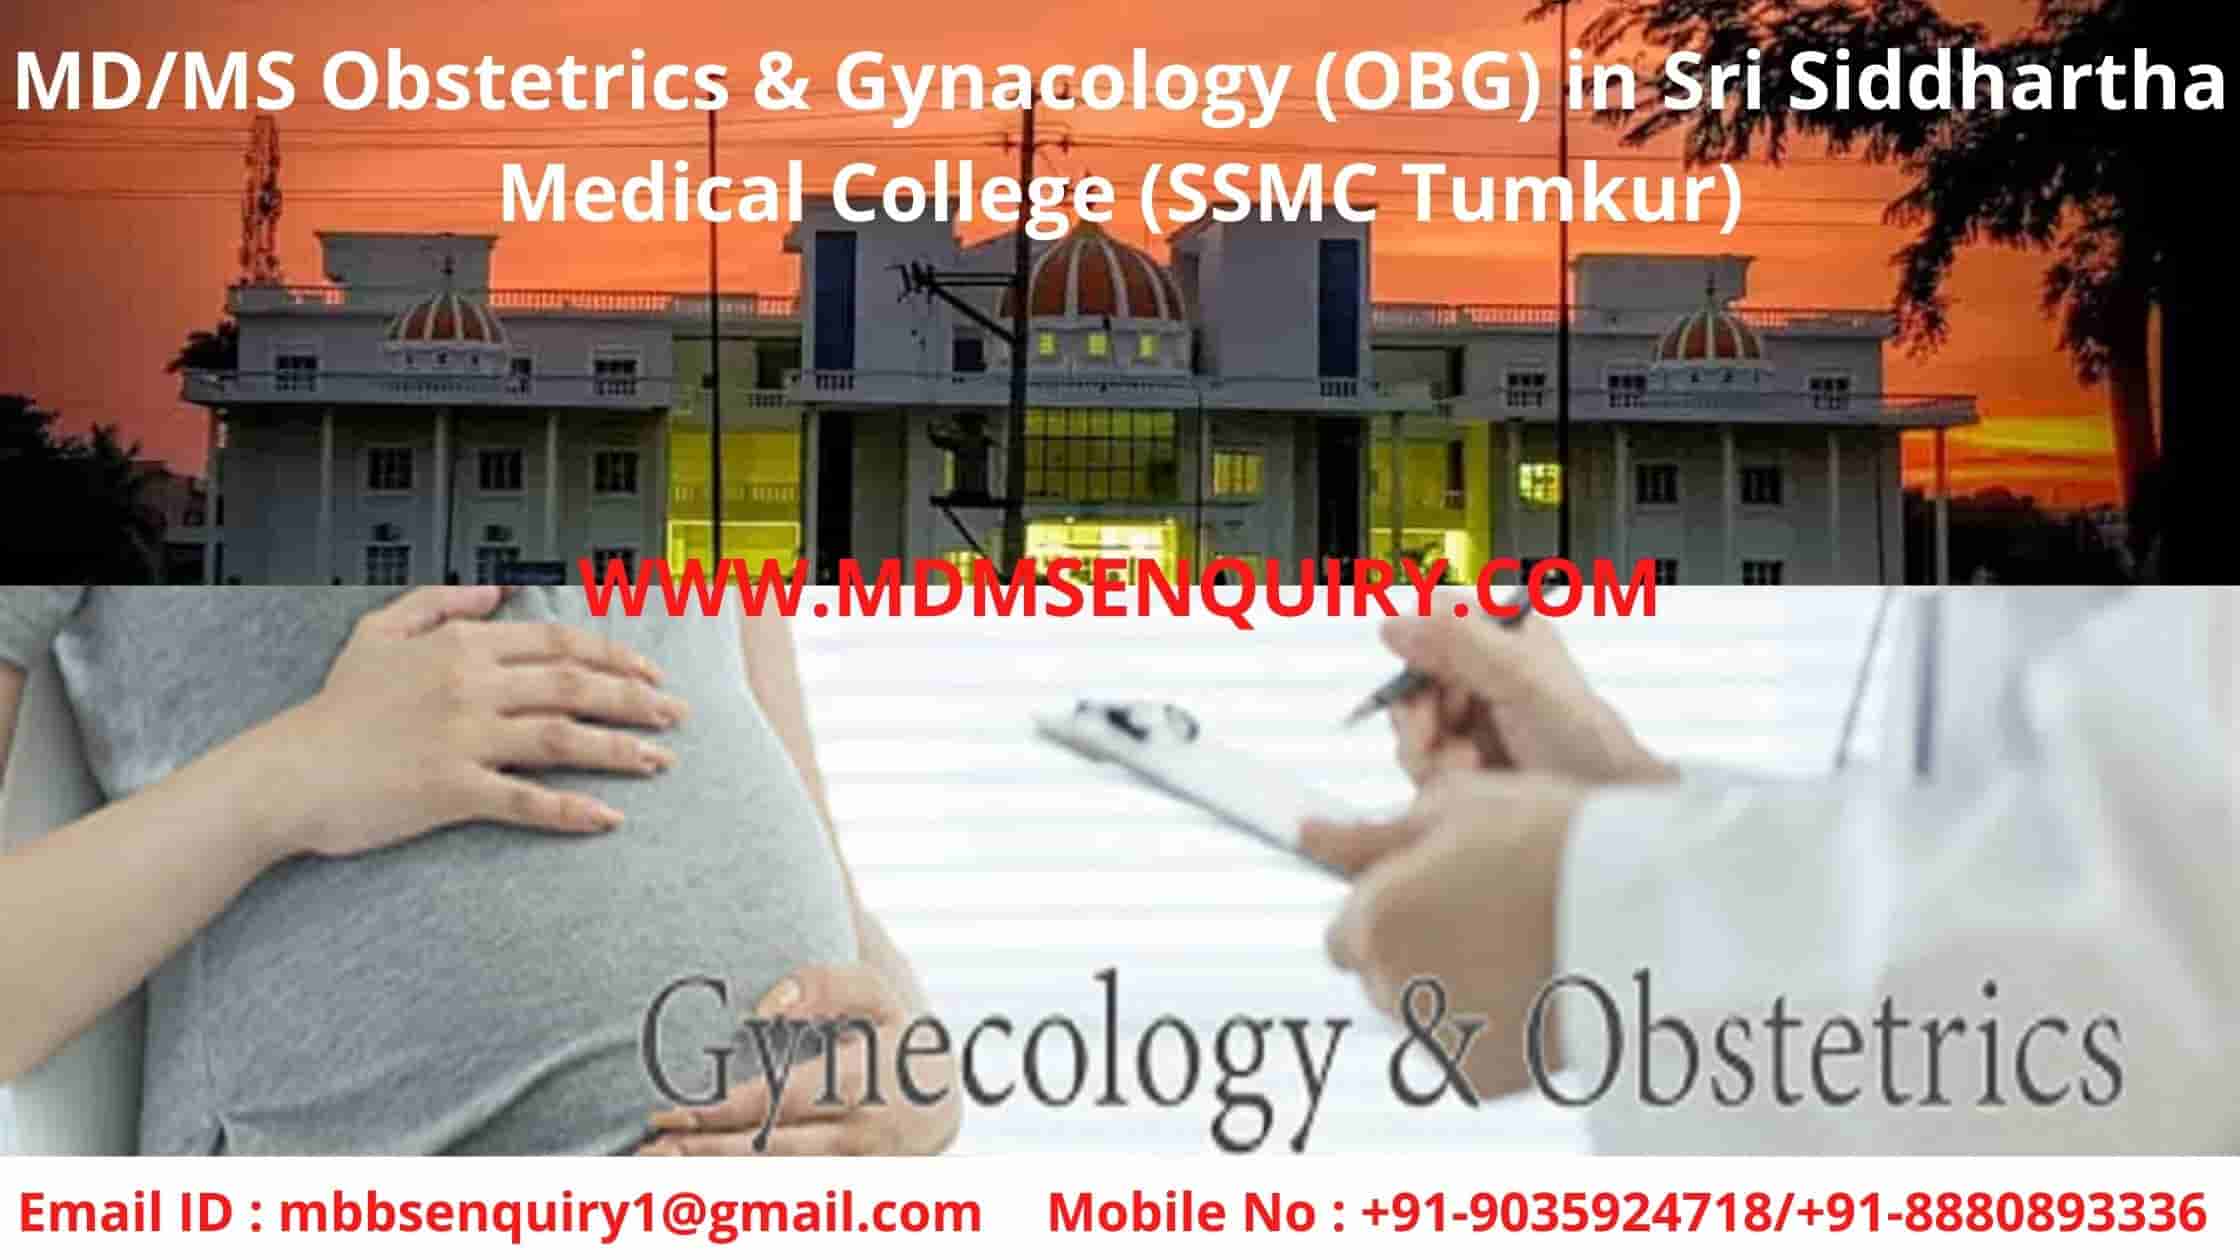 MS Obstetrics & Gynacology (OBG) Admission in Sri Siddhartha Medical College (SSMC Tumkur)